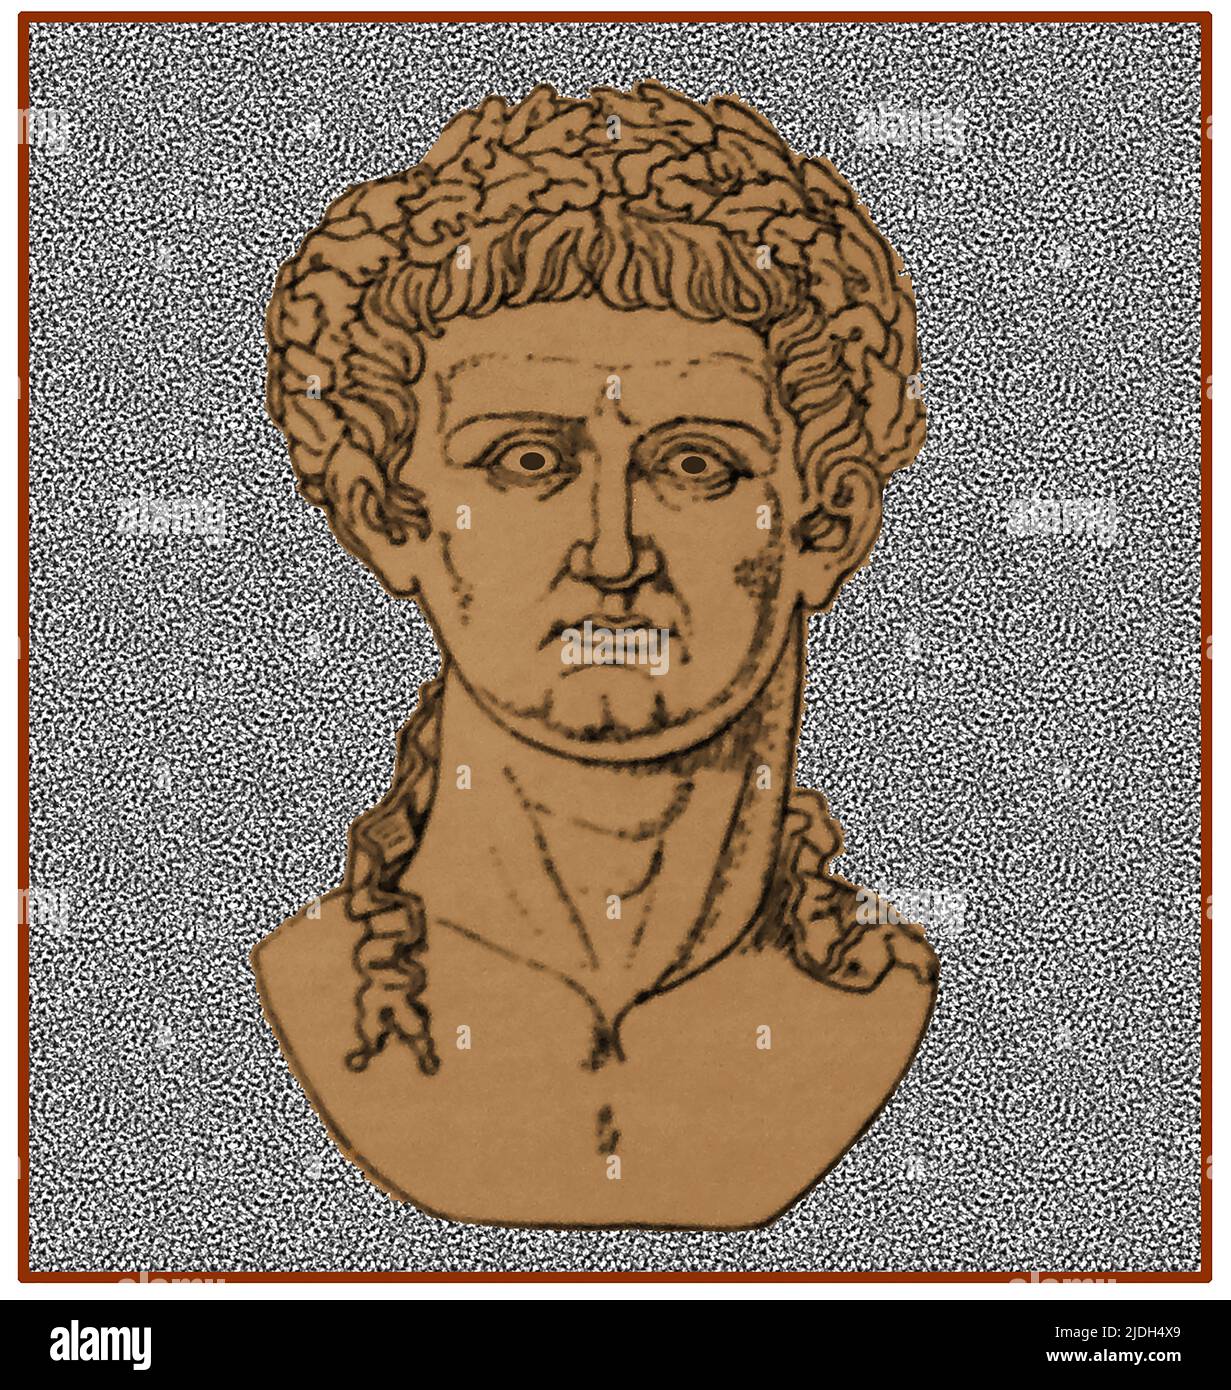 Ein altes Kupferstichporträt des Tiberius Claudius Caesar Augustus Germanicus (10 v. Chr. – 54 n. Chr.), des vierten römischen Kaiser, der von 41 bis 54 n. Chr. regierte ----- UN vecchio ritratto incisore di Tiberio Claudio Cesare Augusto Germanico (10 n. Chr. – 54 d.C.), il Quarto imperatore romano, regnante dal 41 al 54 D.C. Stockfoto